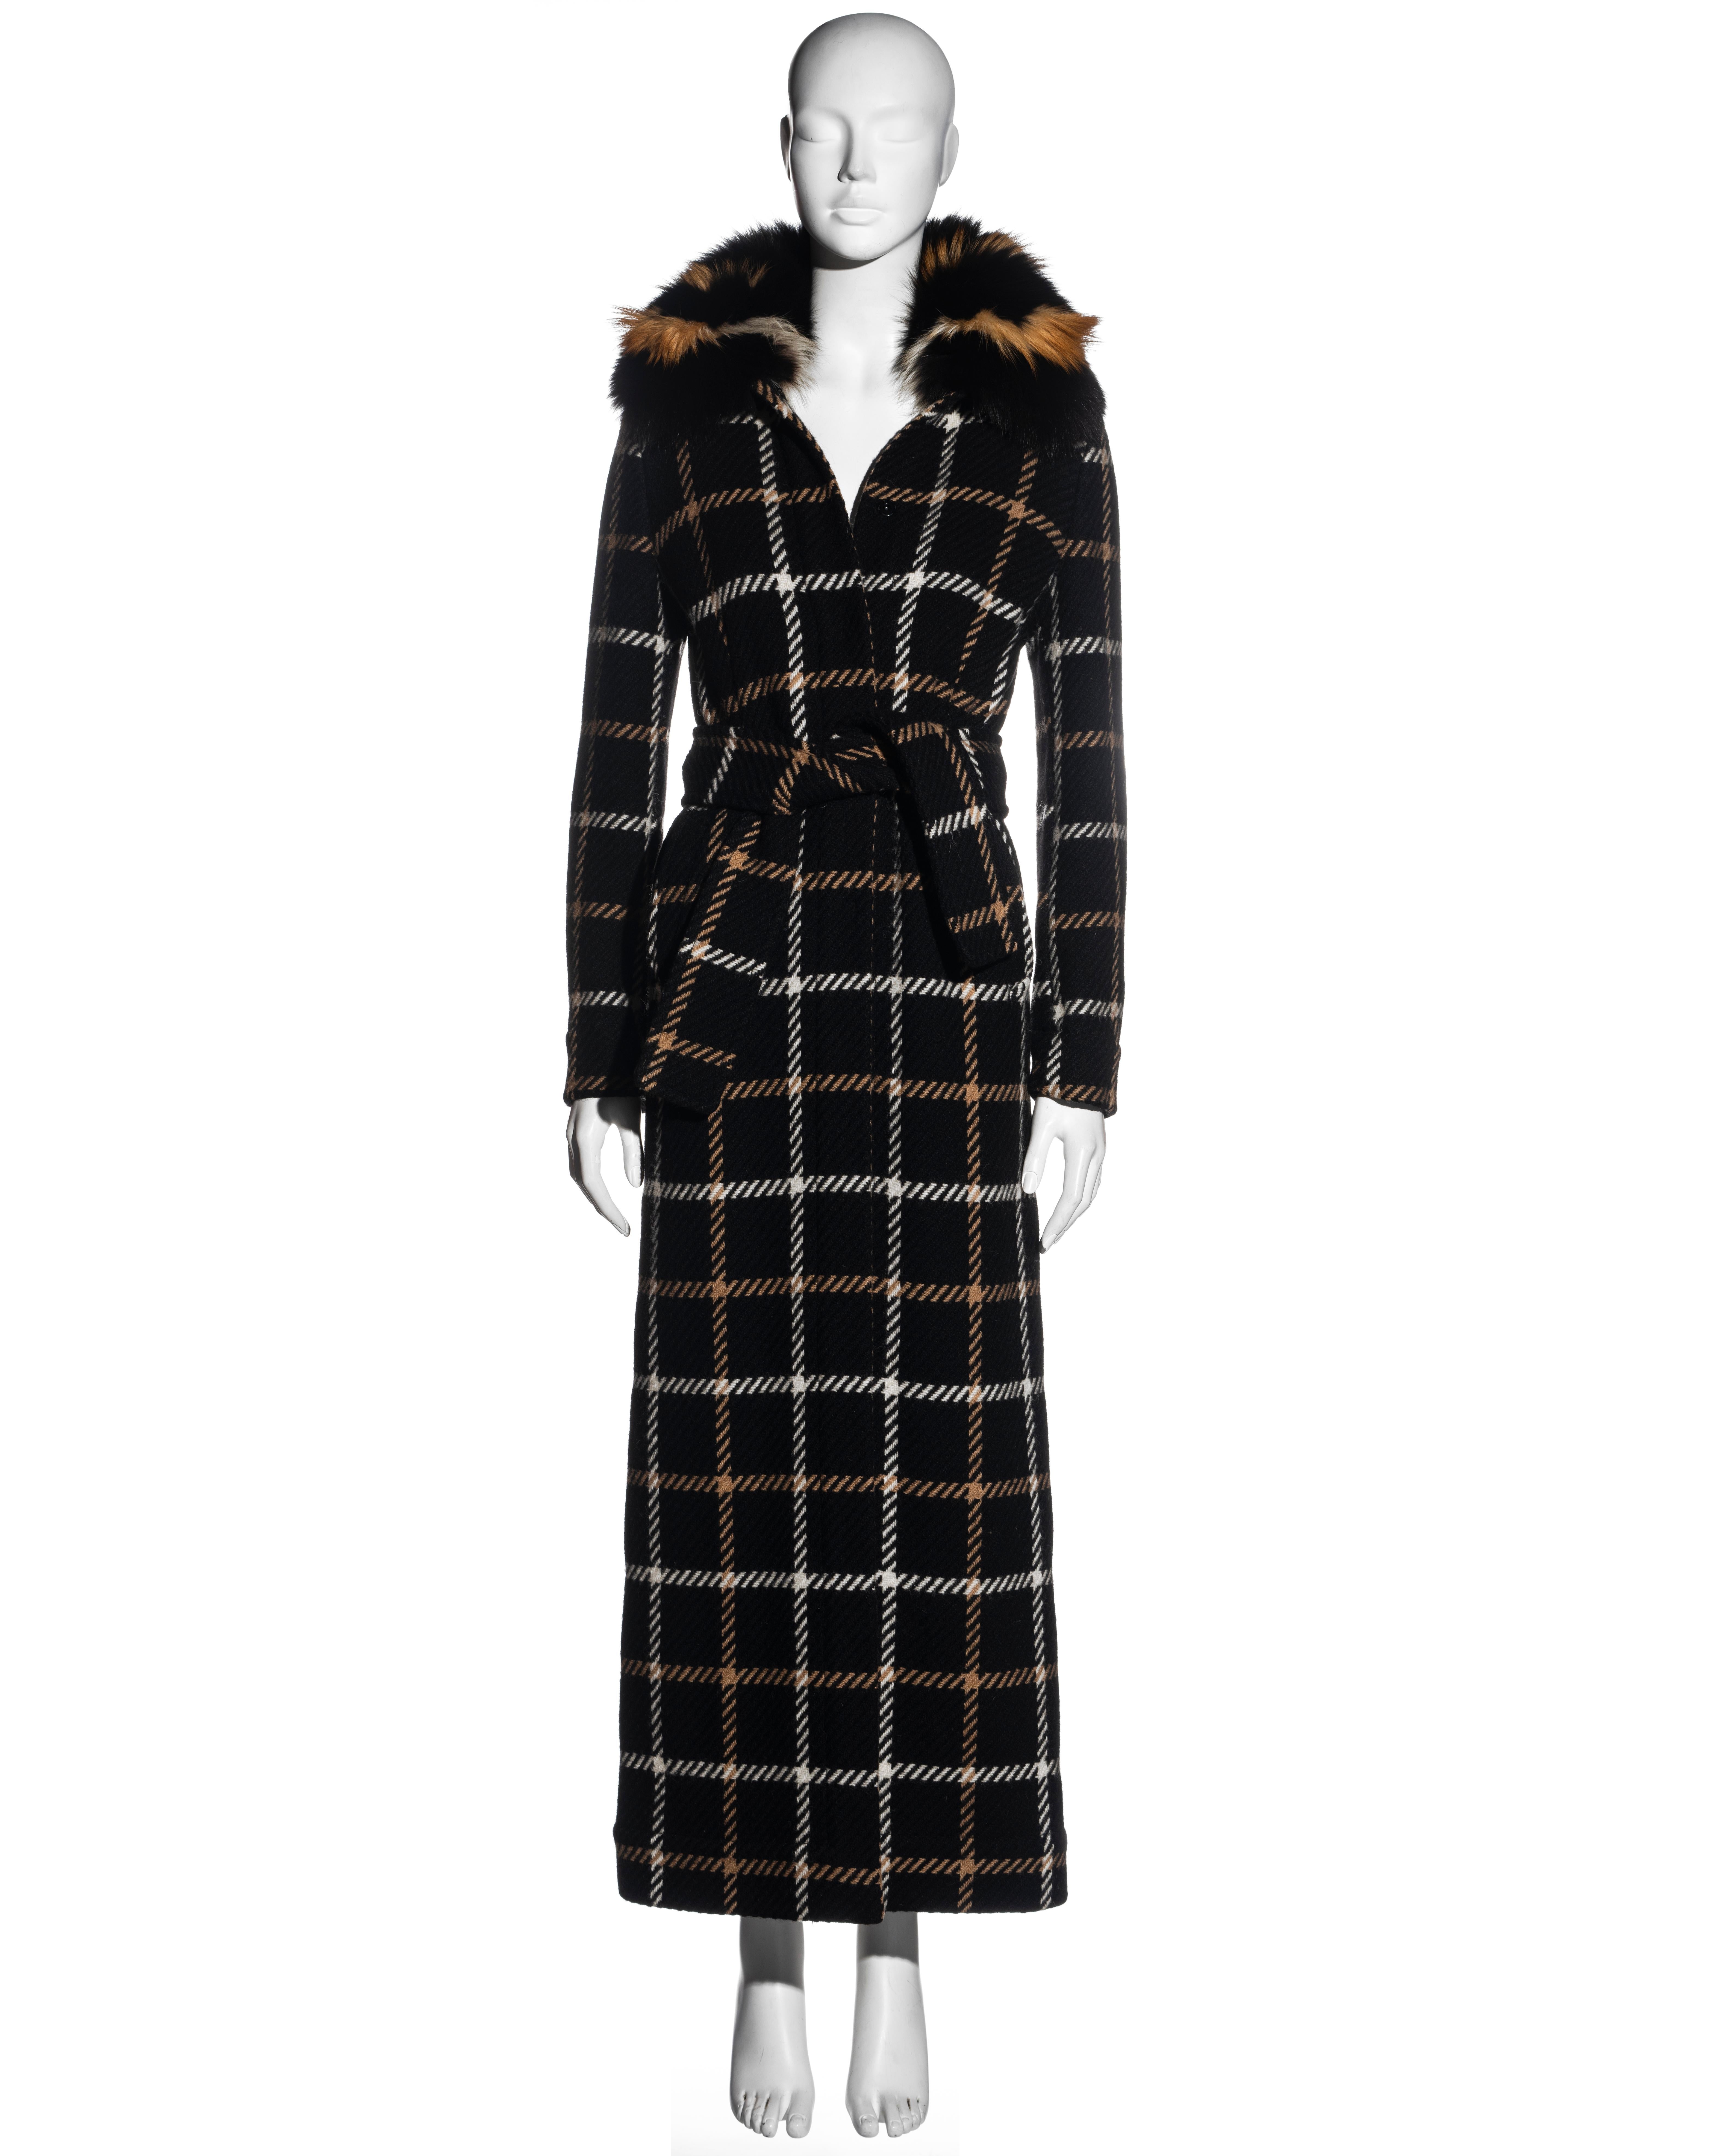 ▪ Dolce & Gabbana black and cream checked wool coat
▪ Fox fur collar 
▪ Matching belt 
▪ Snap button closures 
▪ IT 40 - FR 36 - UK 8
▪ 100% Wool
▪ Fall-Winter 1995